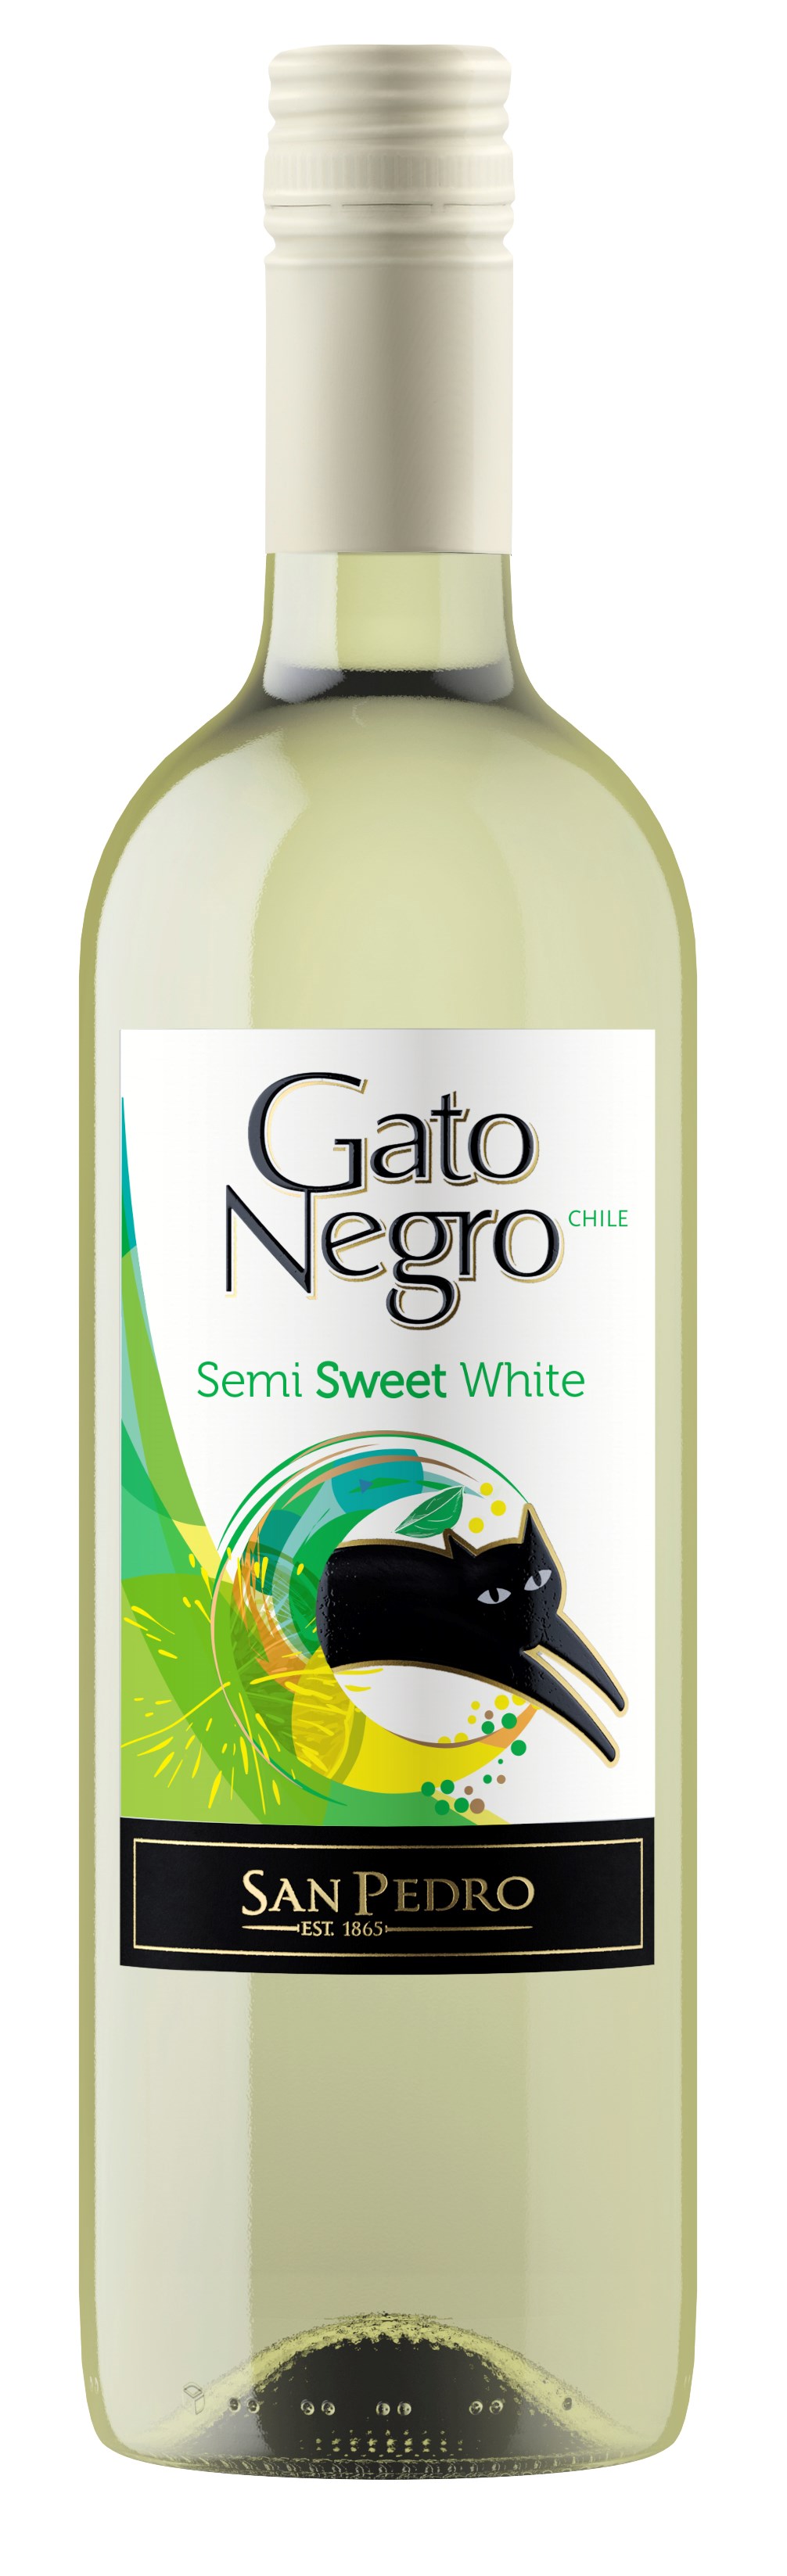 Gato Negro Semi Sweet White